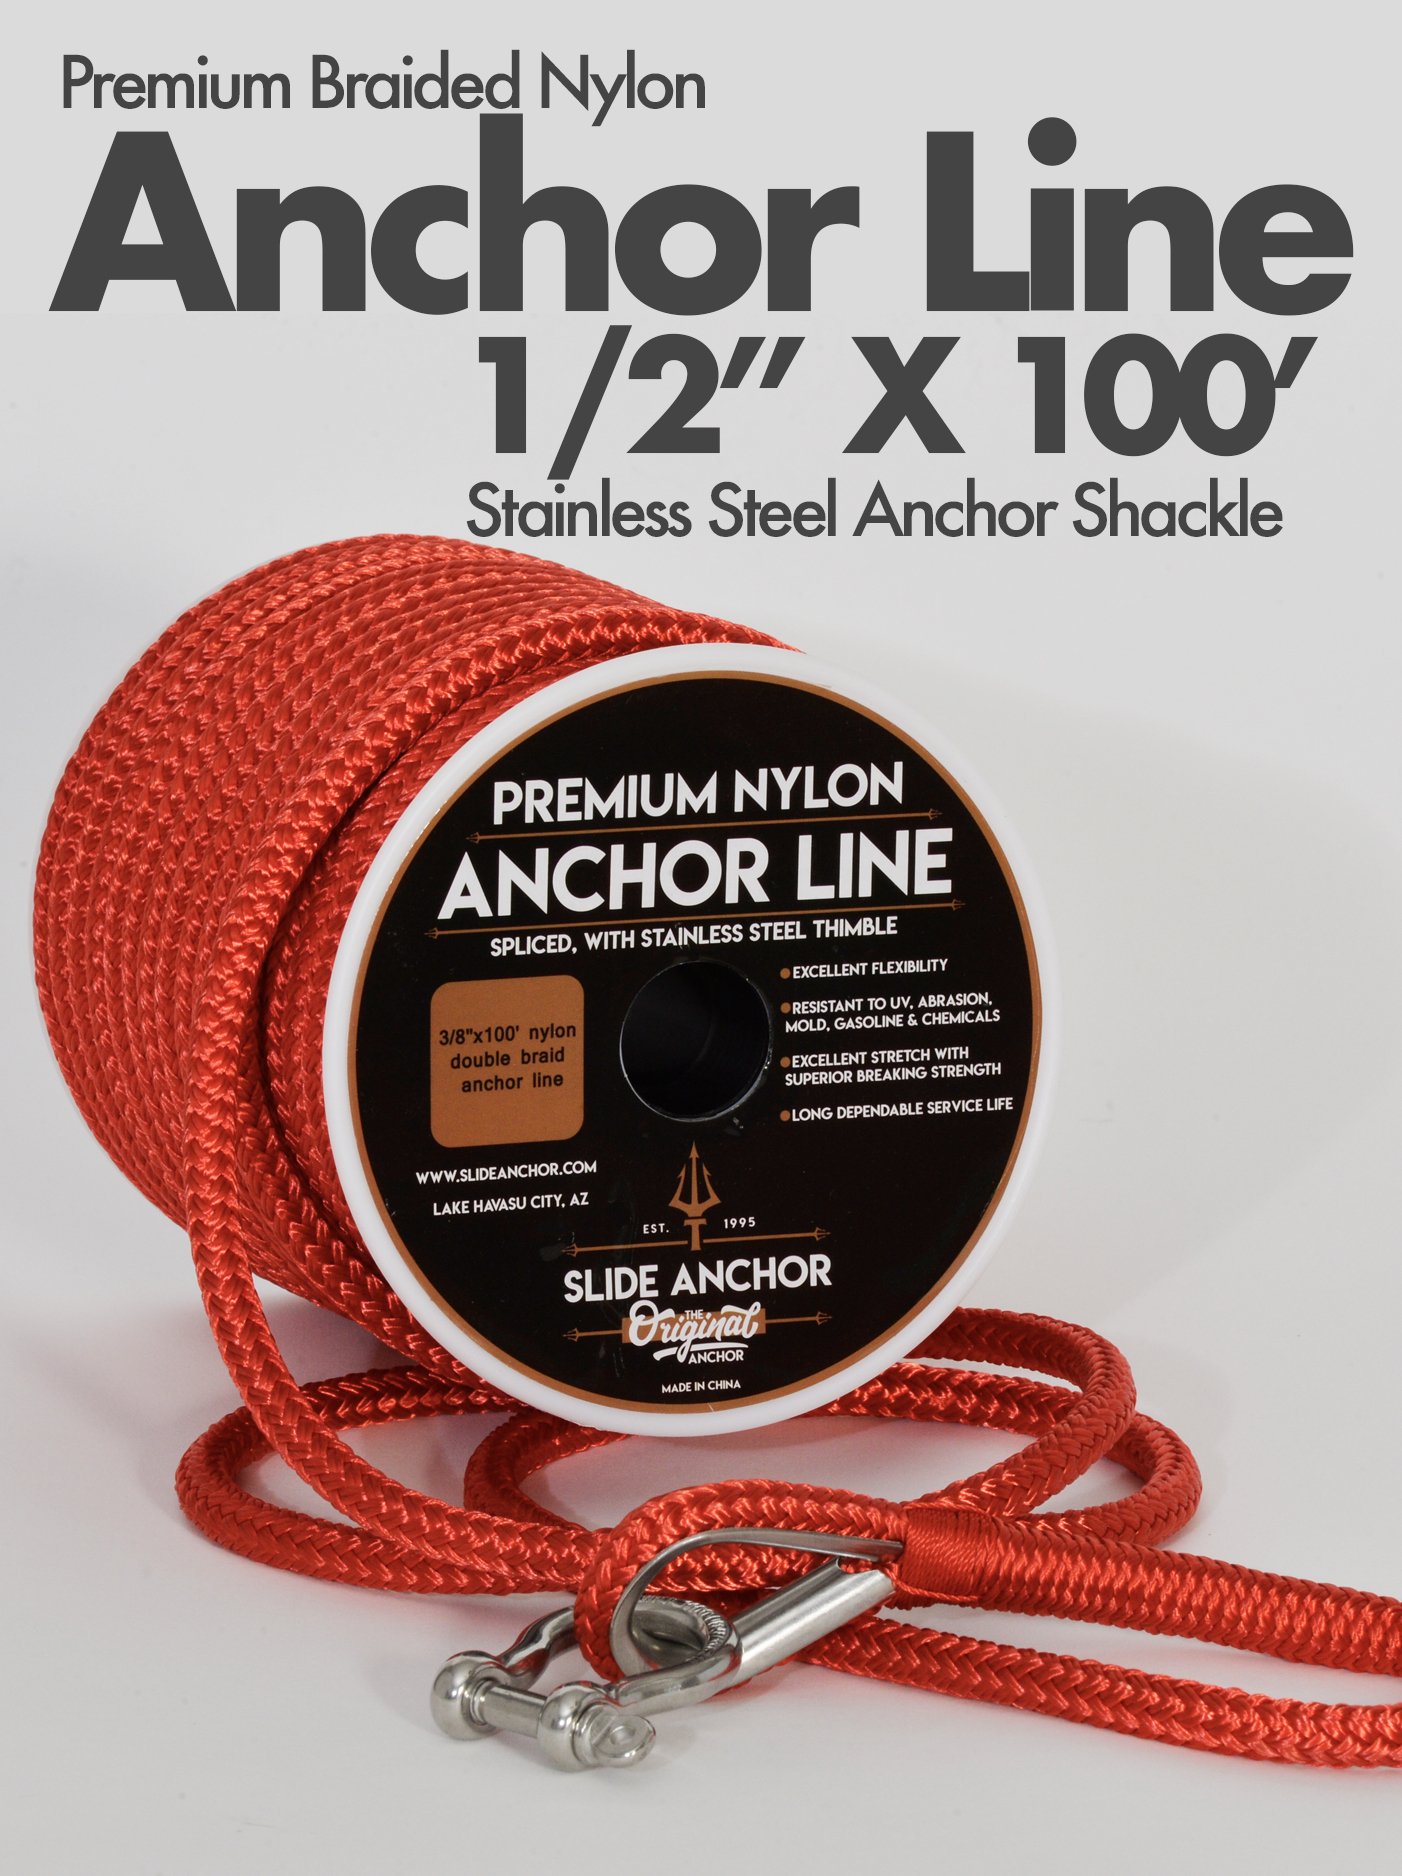 1/2 Premium Braided Nylon Anchor Line - 100 ft. (Includes